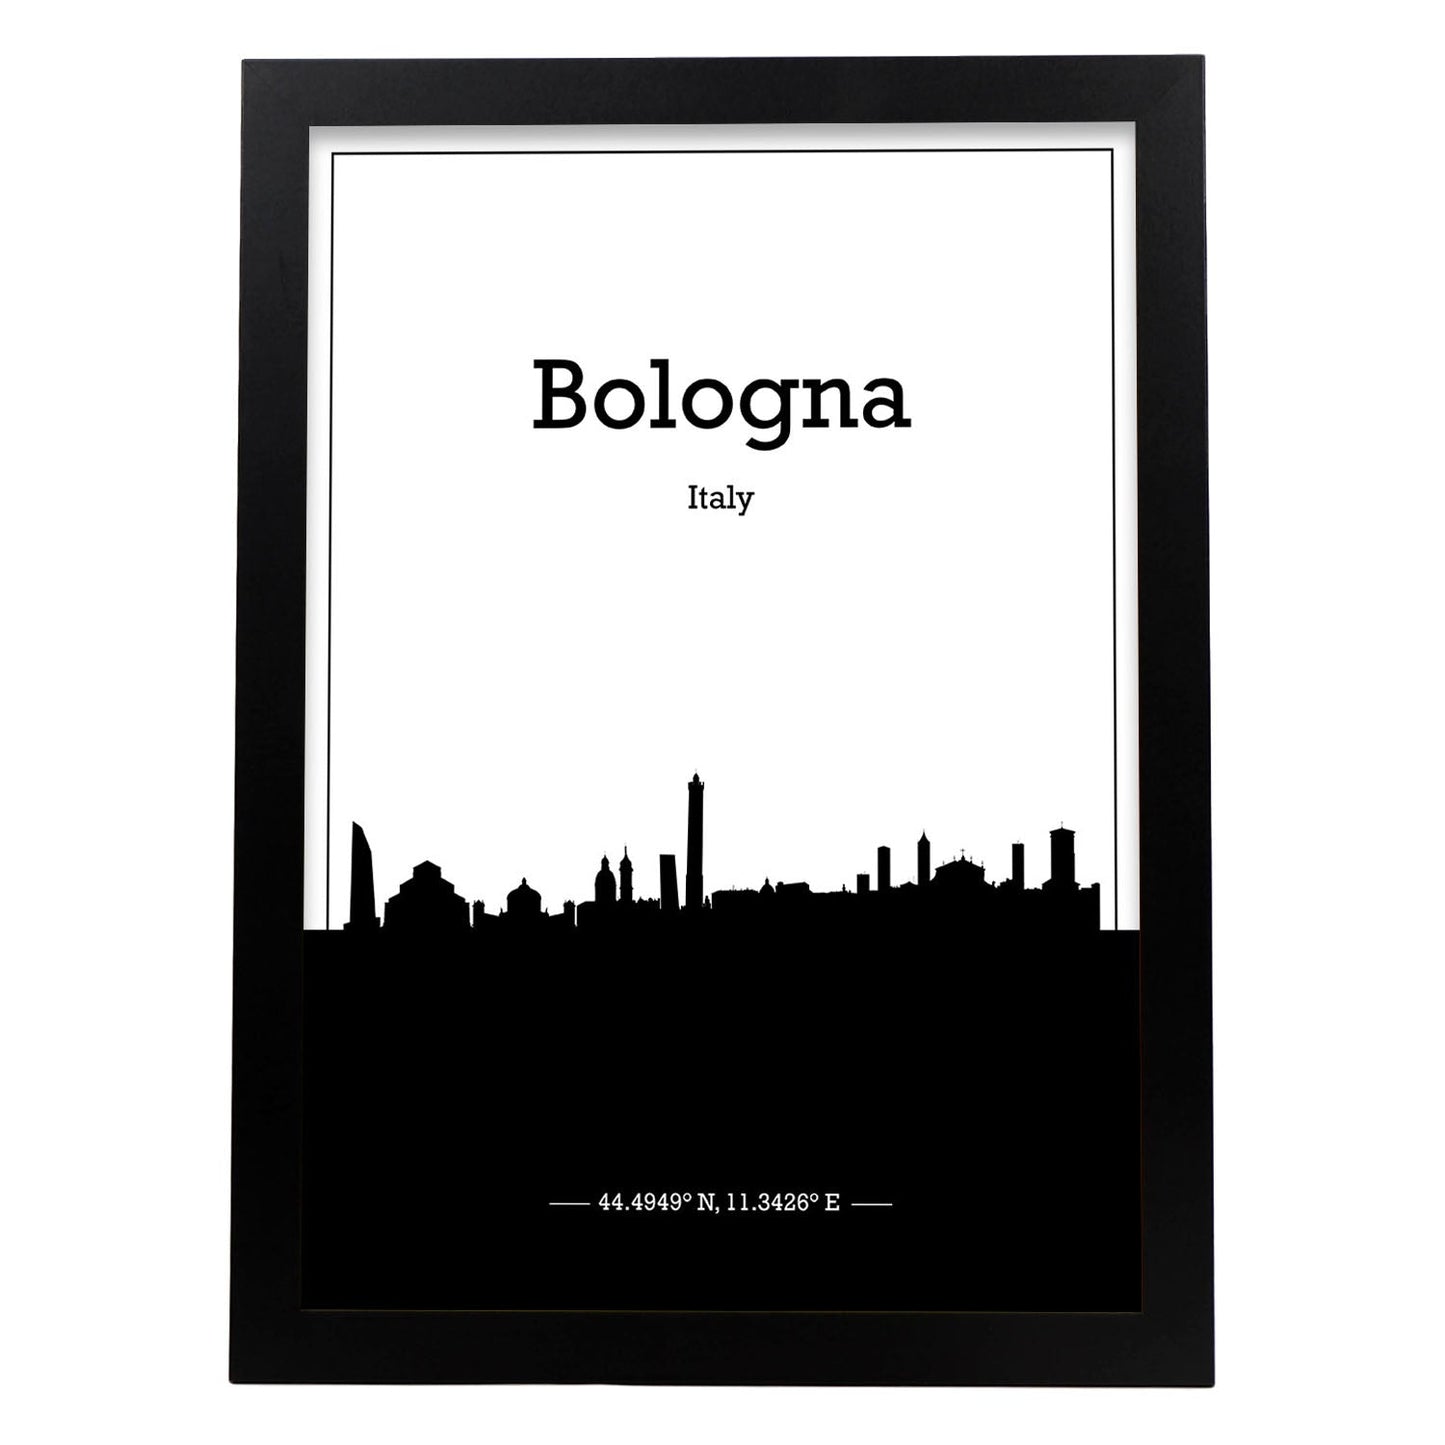 Poster con mapa de Bologna - Italia. Láminas con Skyline de ciudades de Italia con sombra negra.-Artwork-Nacnic-A3-Marco Negro-Nacnic Estudio SL